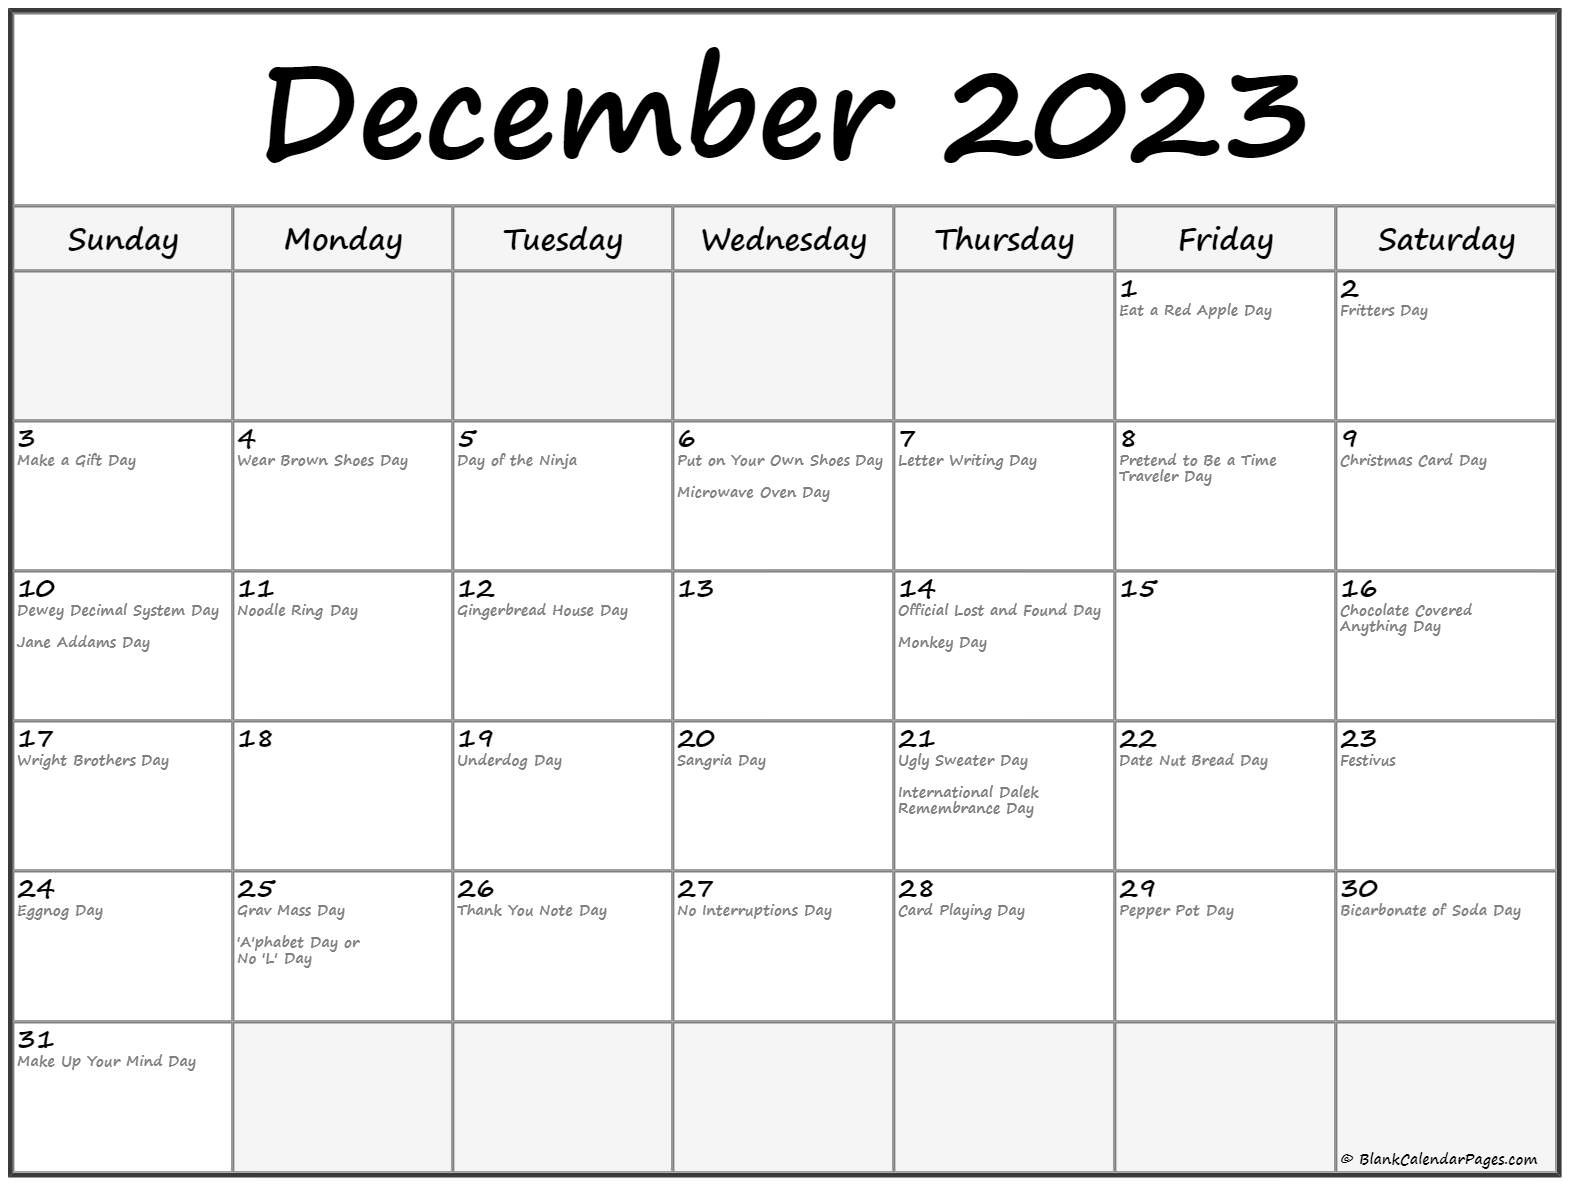 busiest travel days december 2023